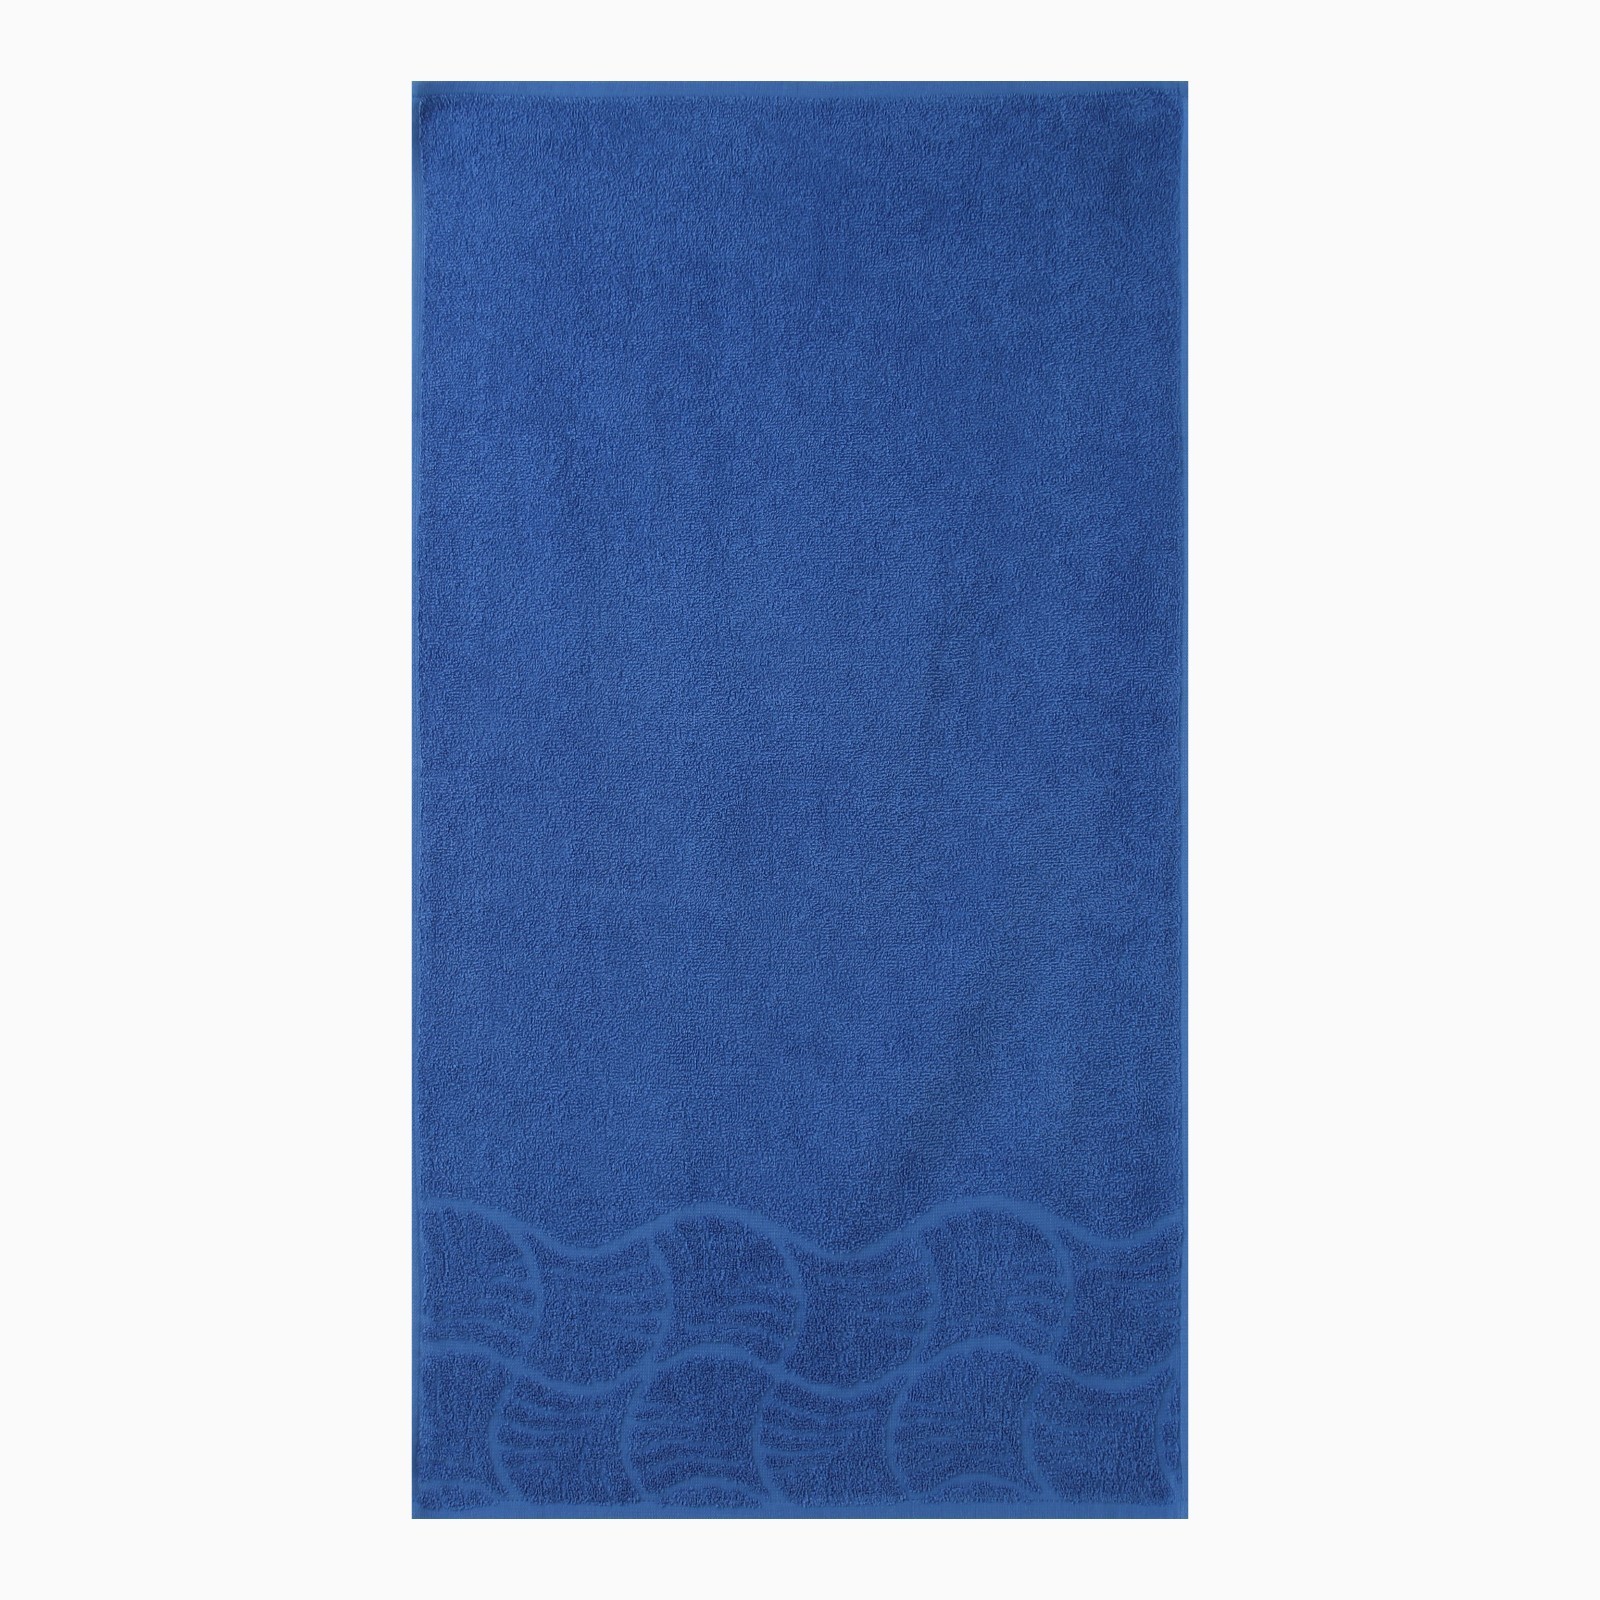 Полотенце ДМ Волна 70x130 см махровое синее